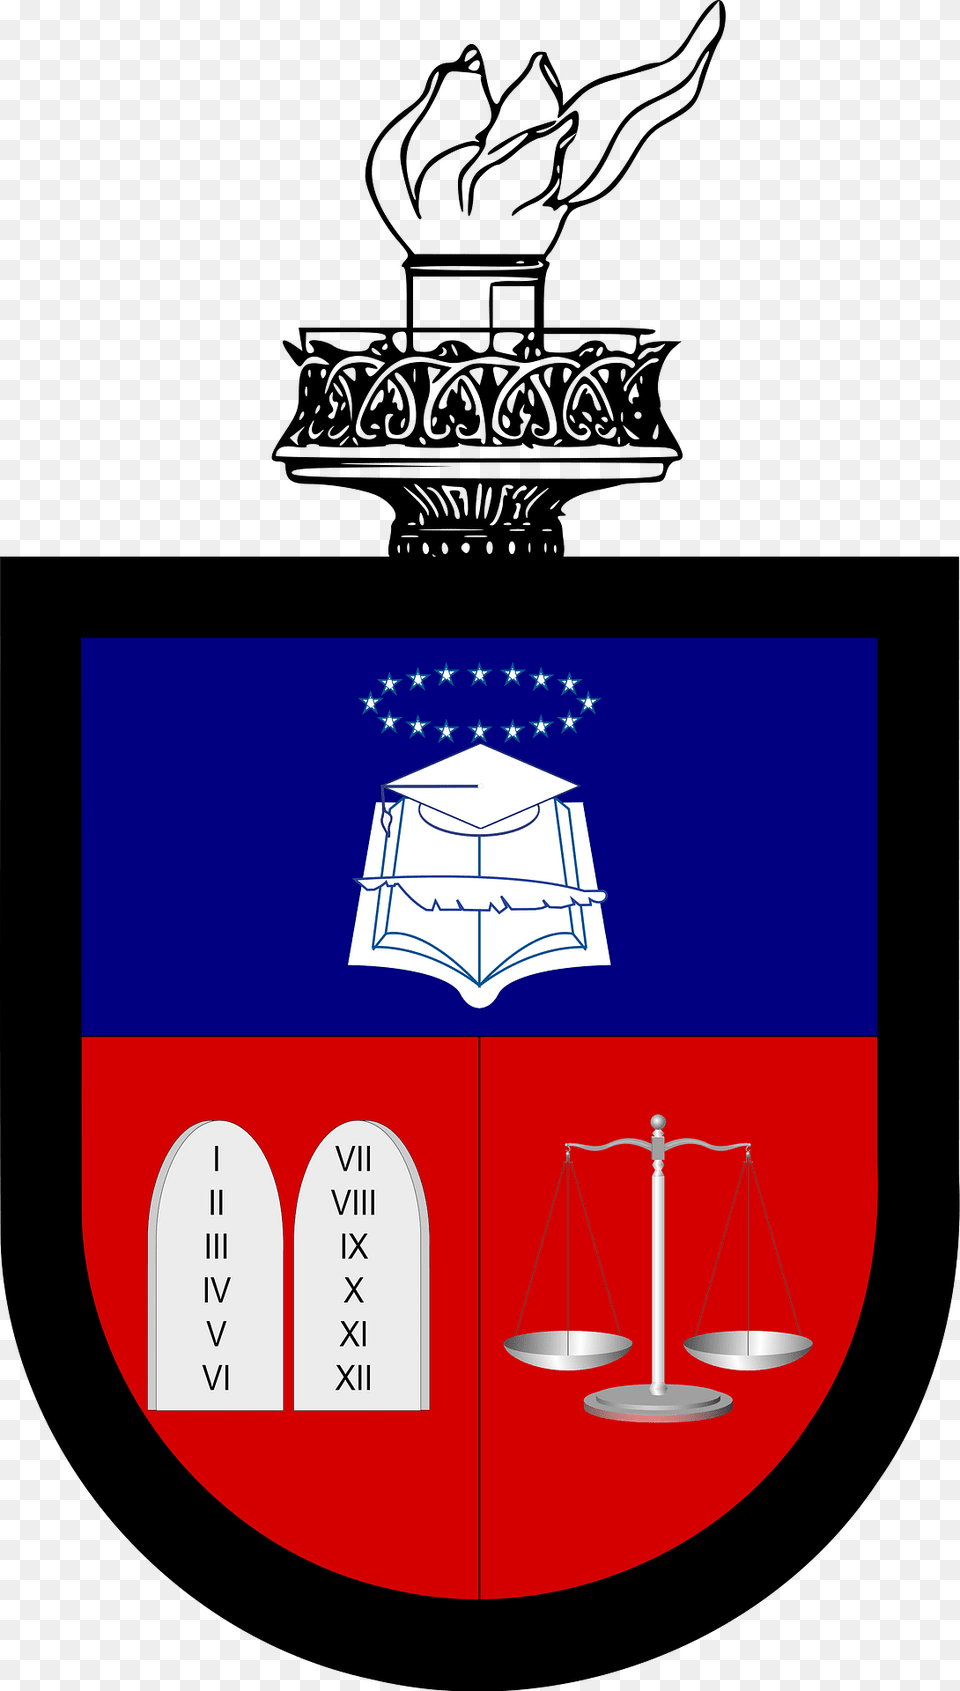 Escudo De La Facultad De Jurisprudencia De La Universidad De Guayaquil Clipart Png